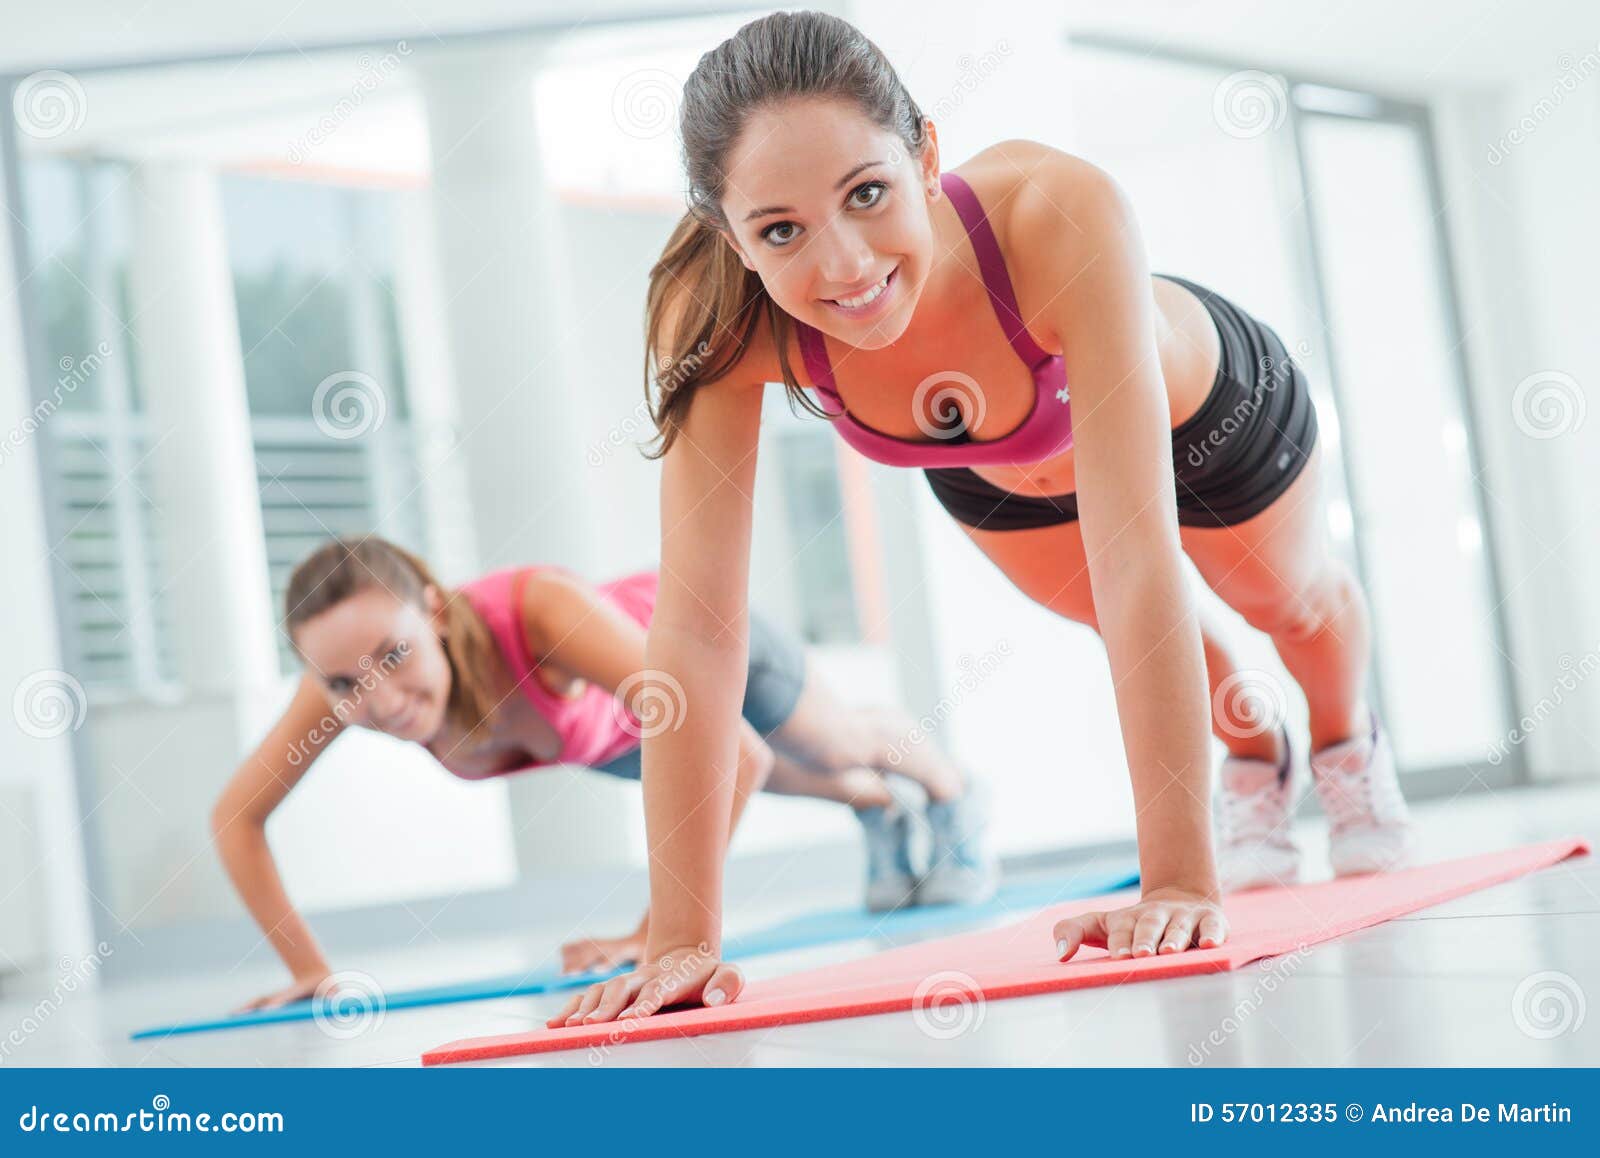 Girls Doing Push Ups at the Gym Stock Image - Image of push, beautiful:  57012335